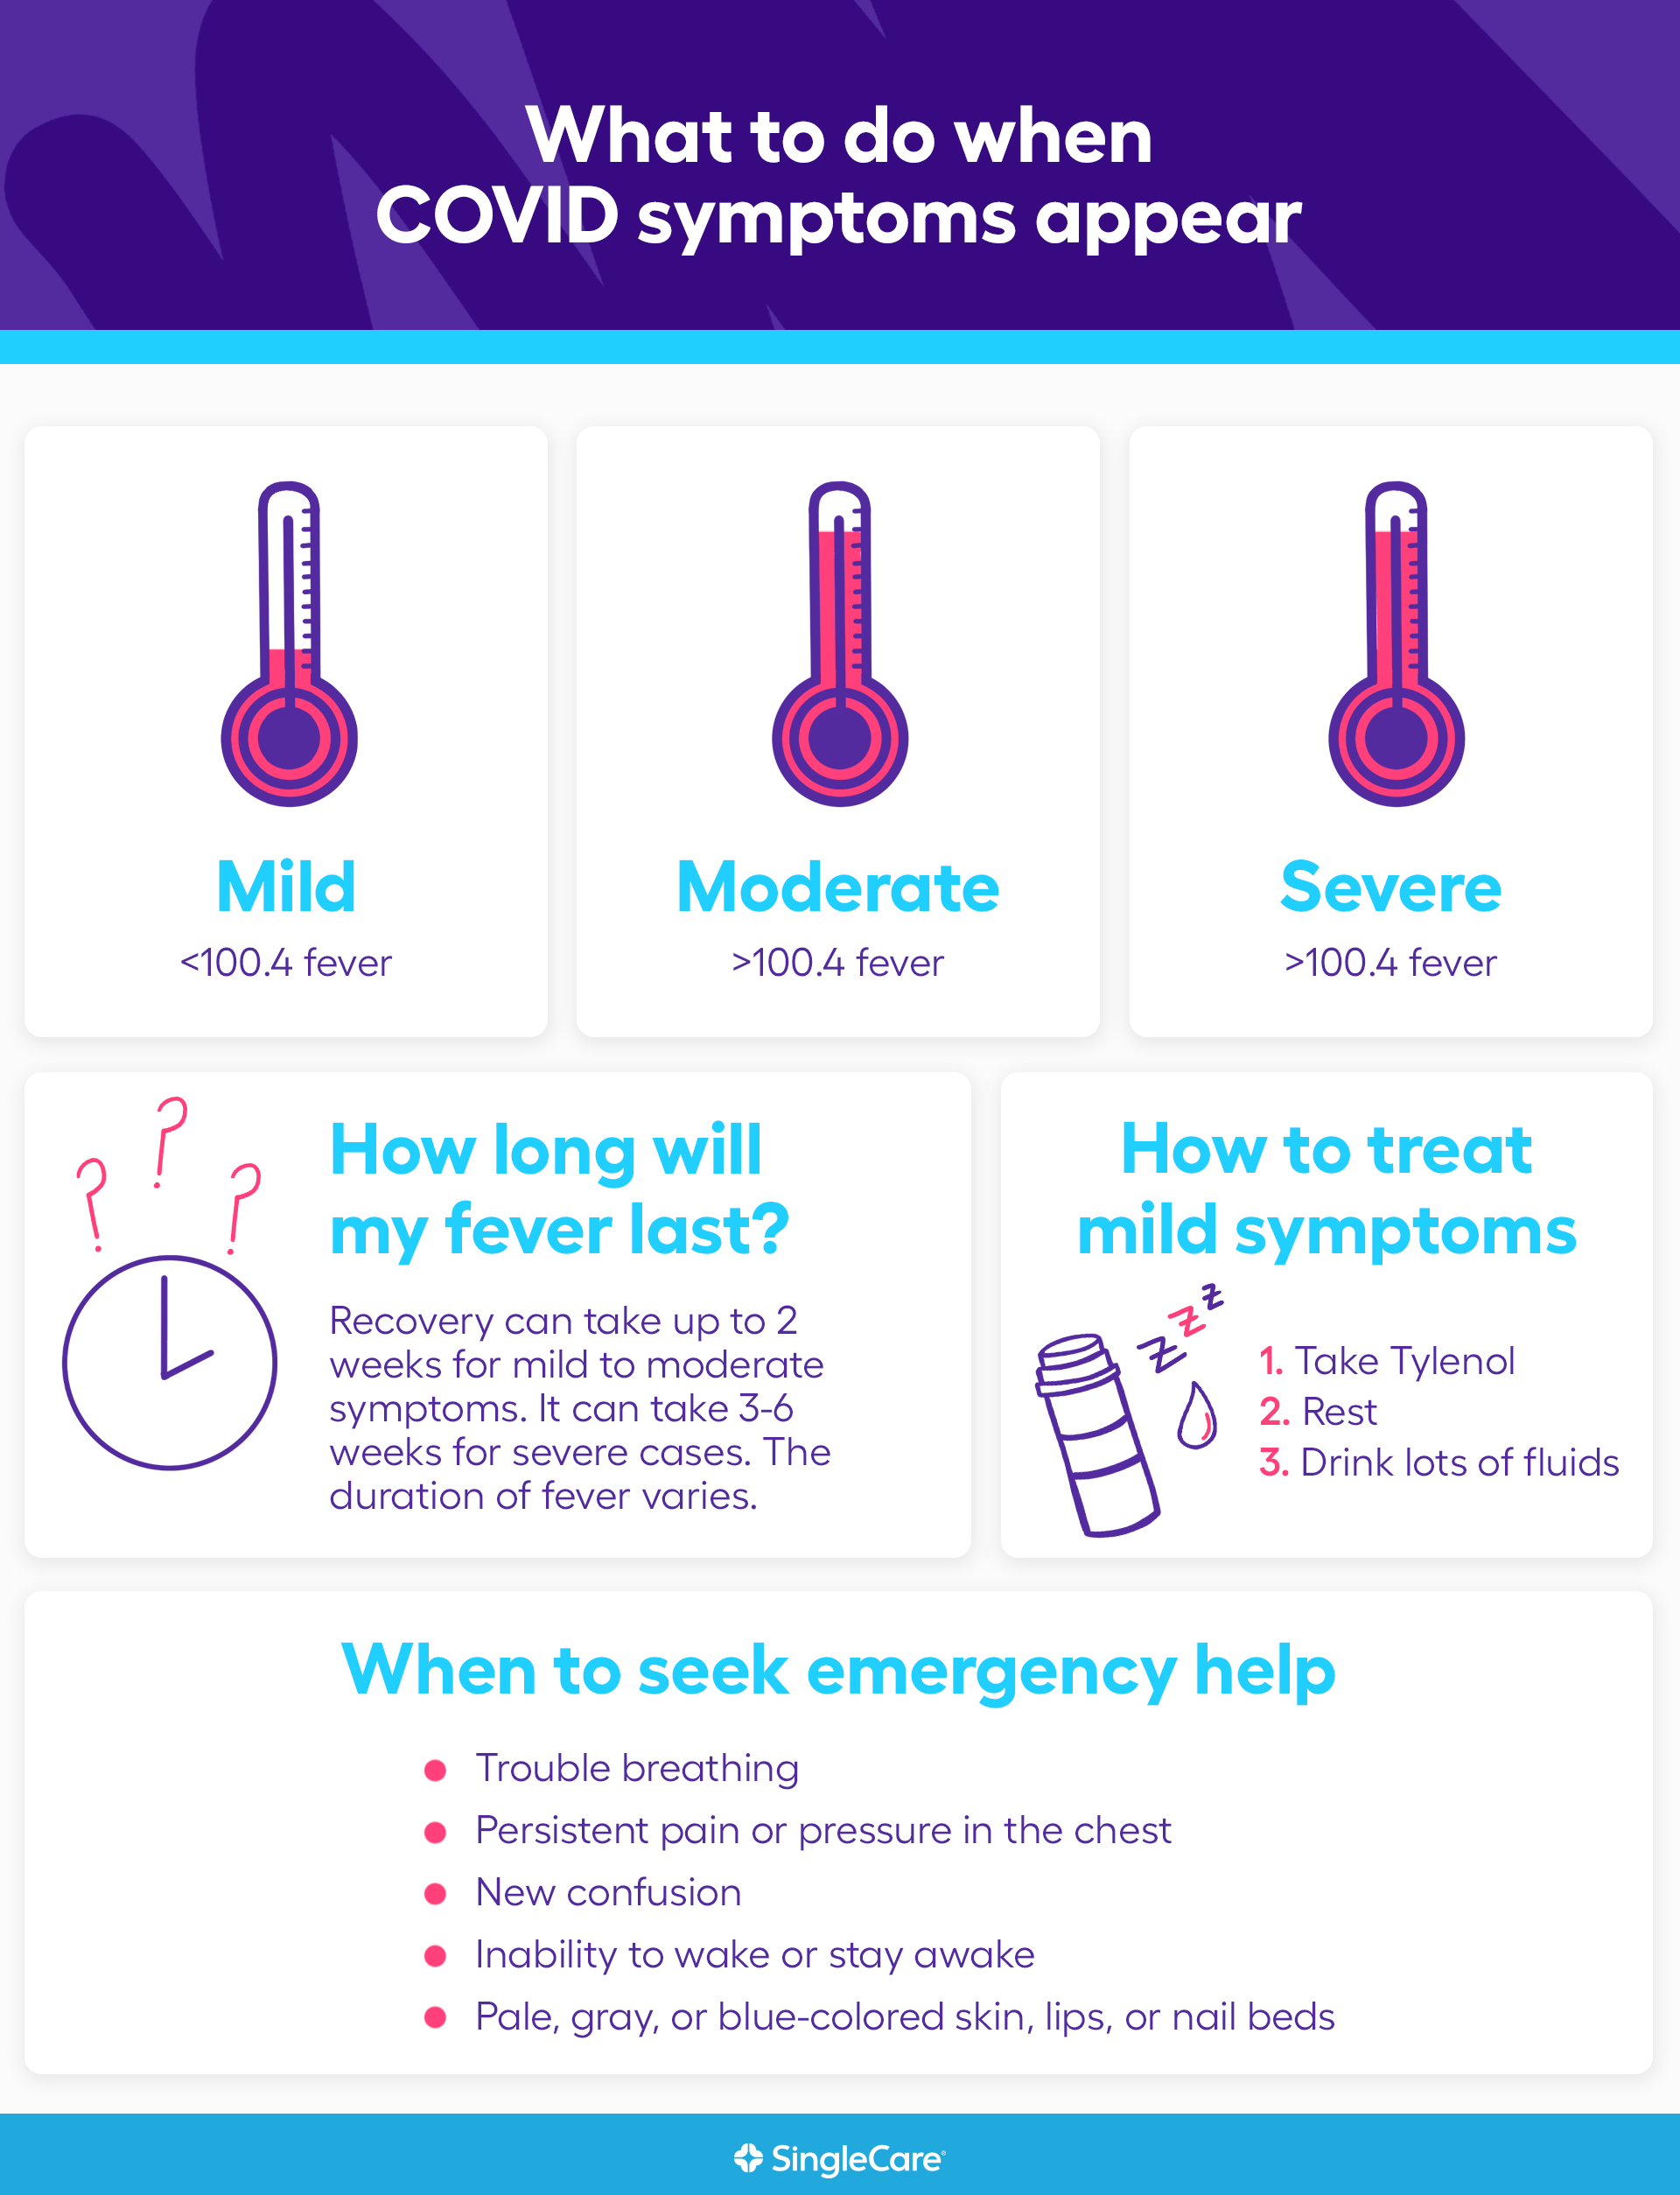 What are the mild symptoms of mild COVID?